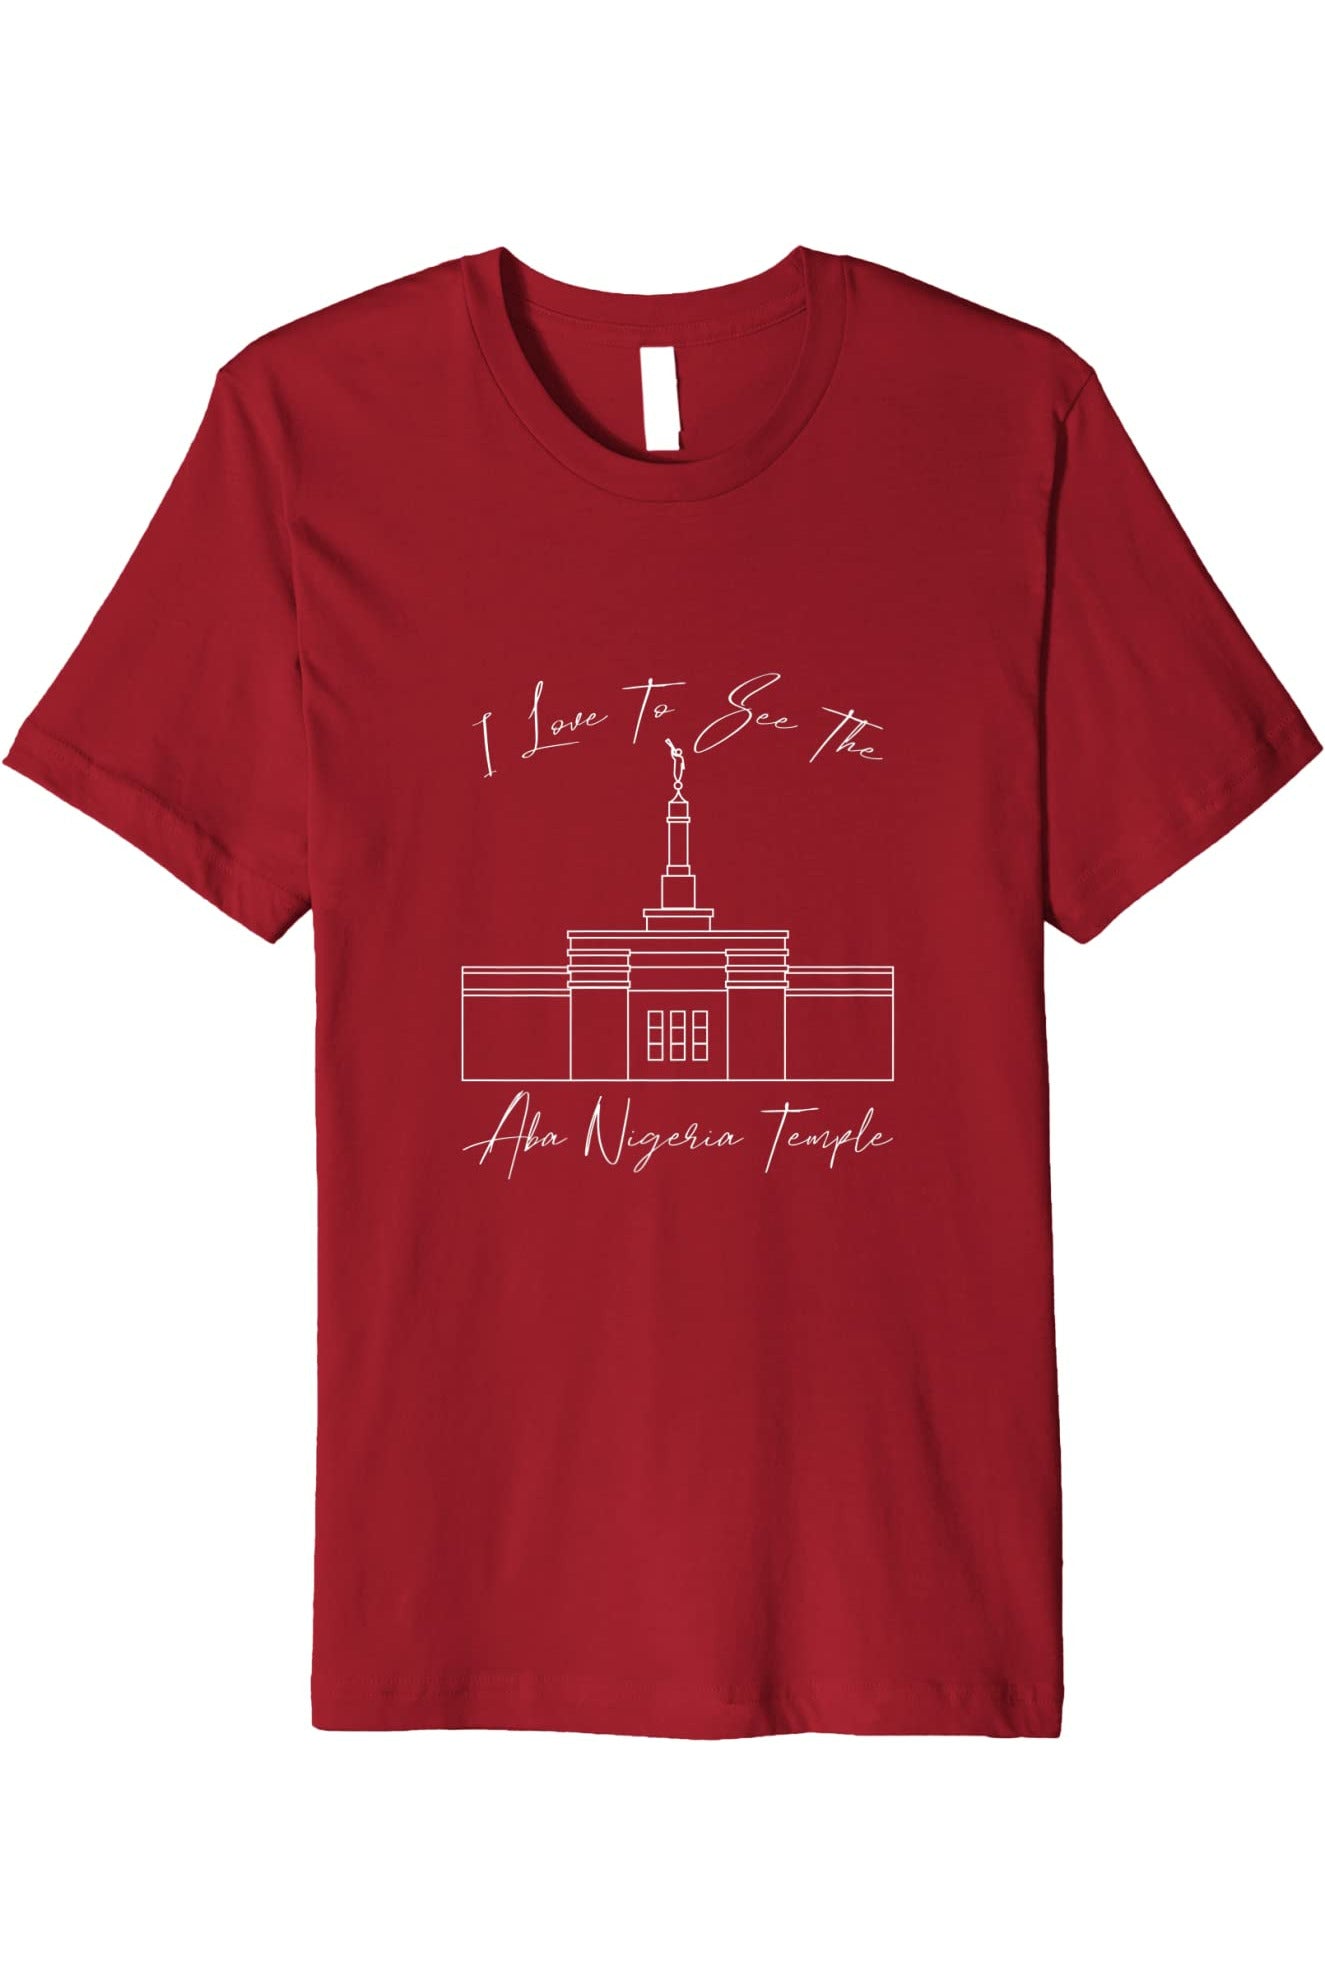 Aba Nigeria Temple T-Shirt - Premium - Calligraphy Style (English) US